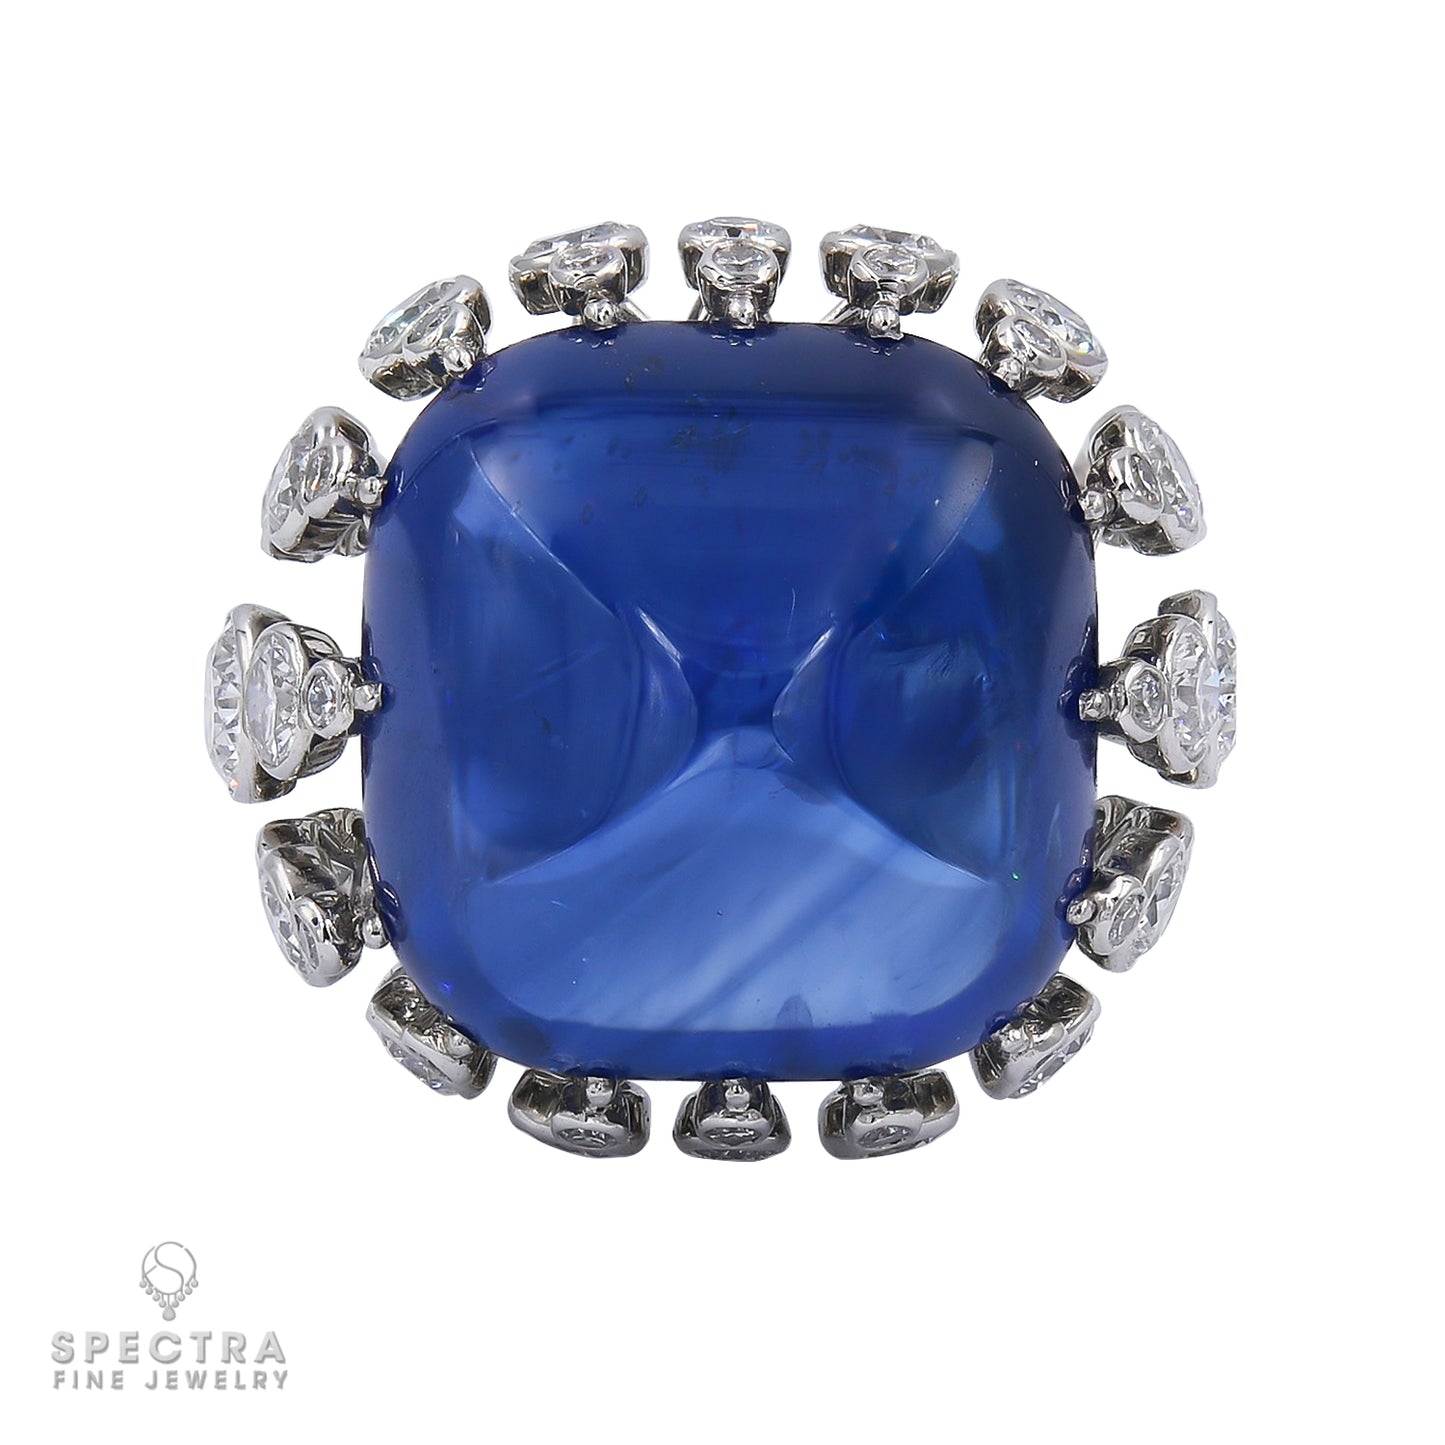 Spectra Fine Jewelry's Magnificent 43.22 Carat Ceylon Sapphire Diamond Ring